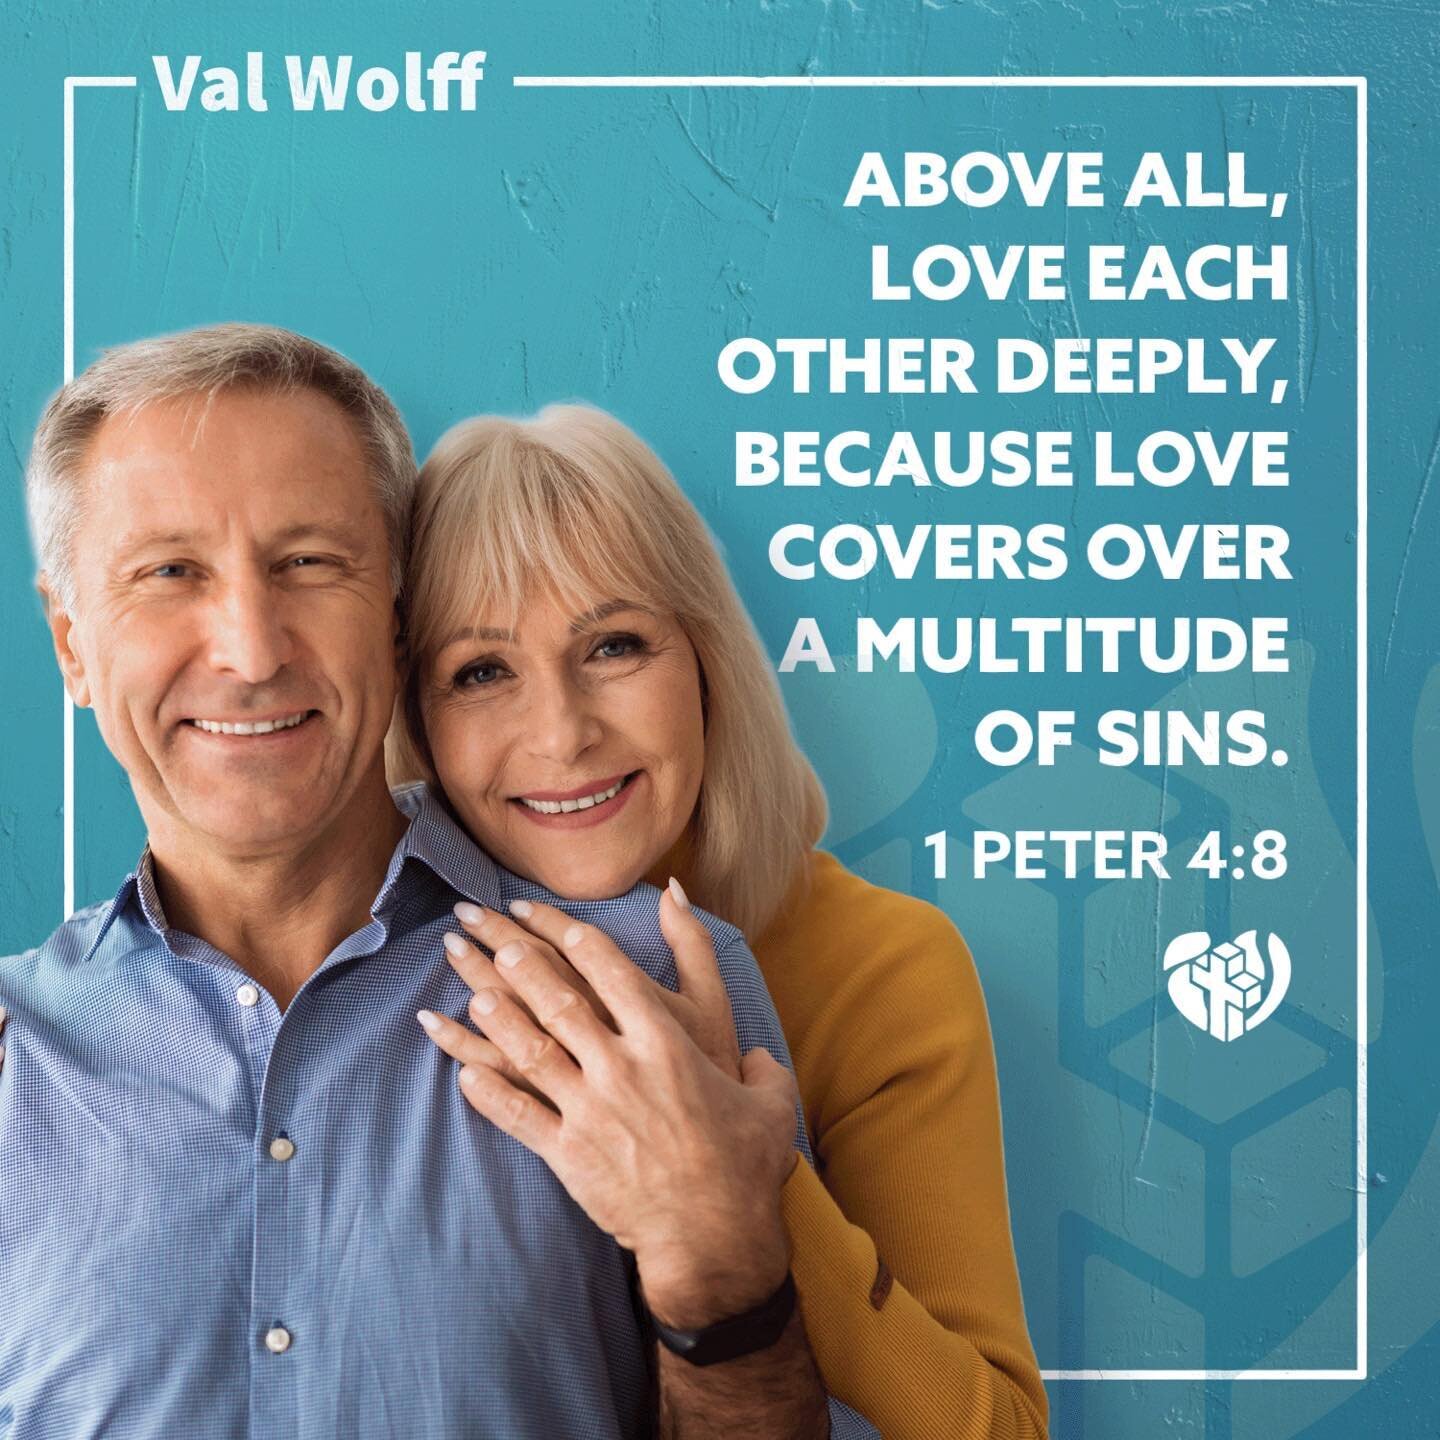 #love #sins #aboveall #valwolff